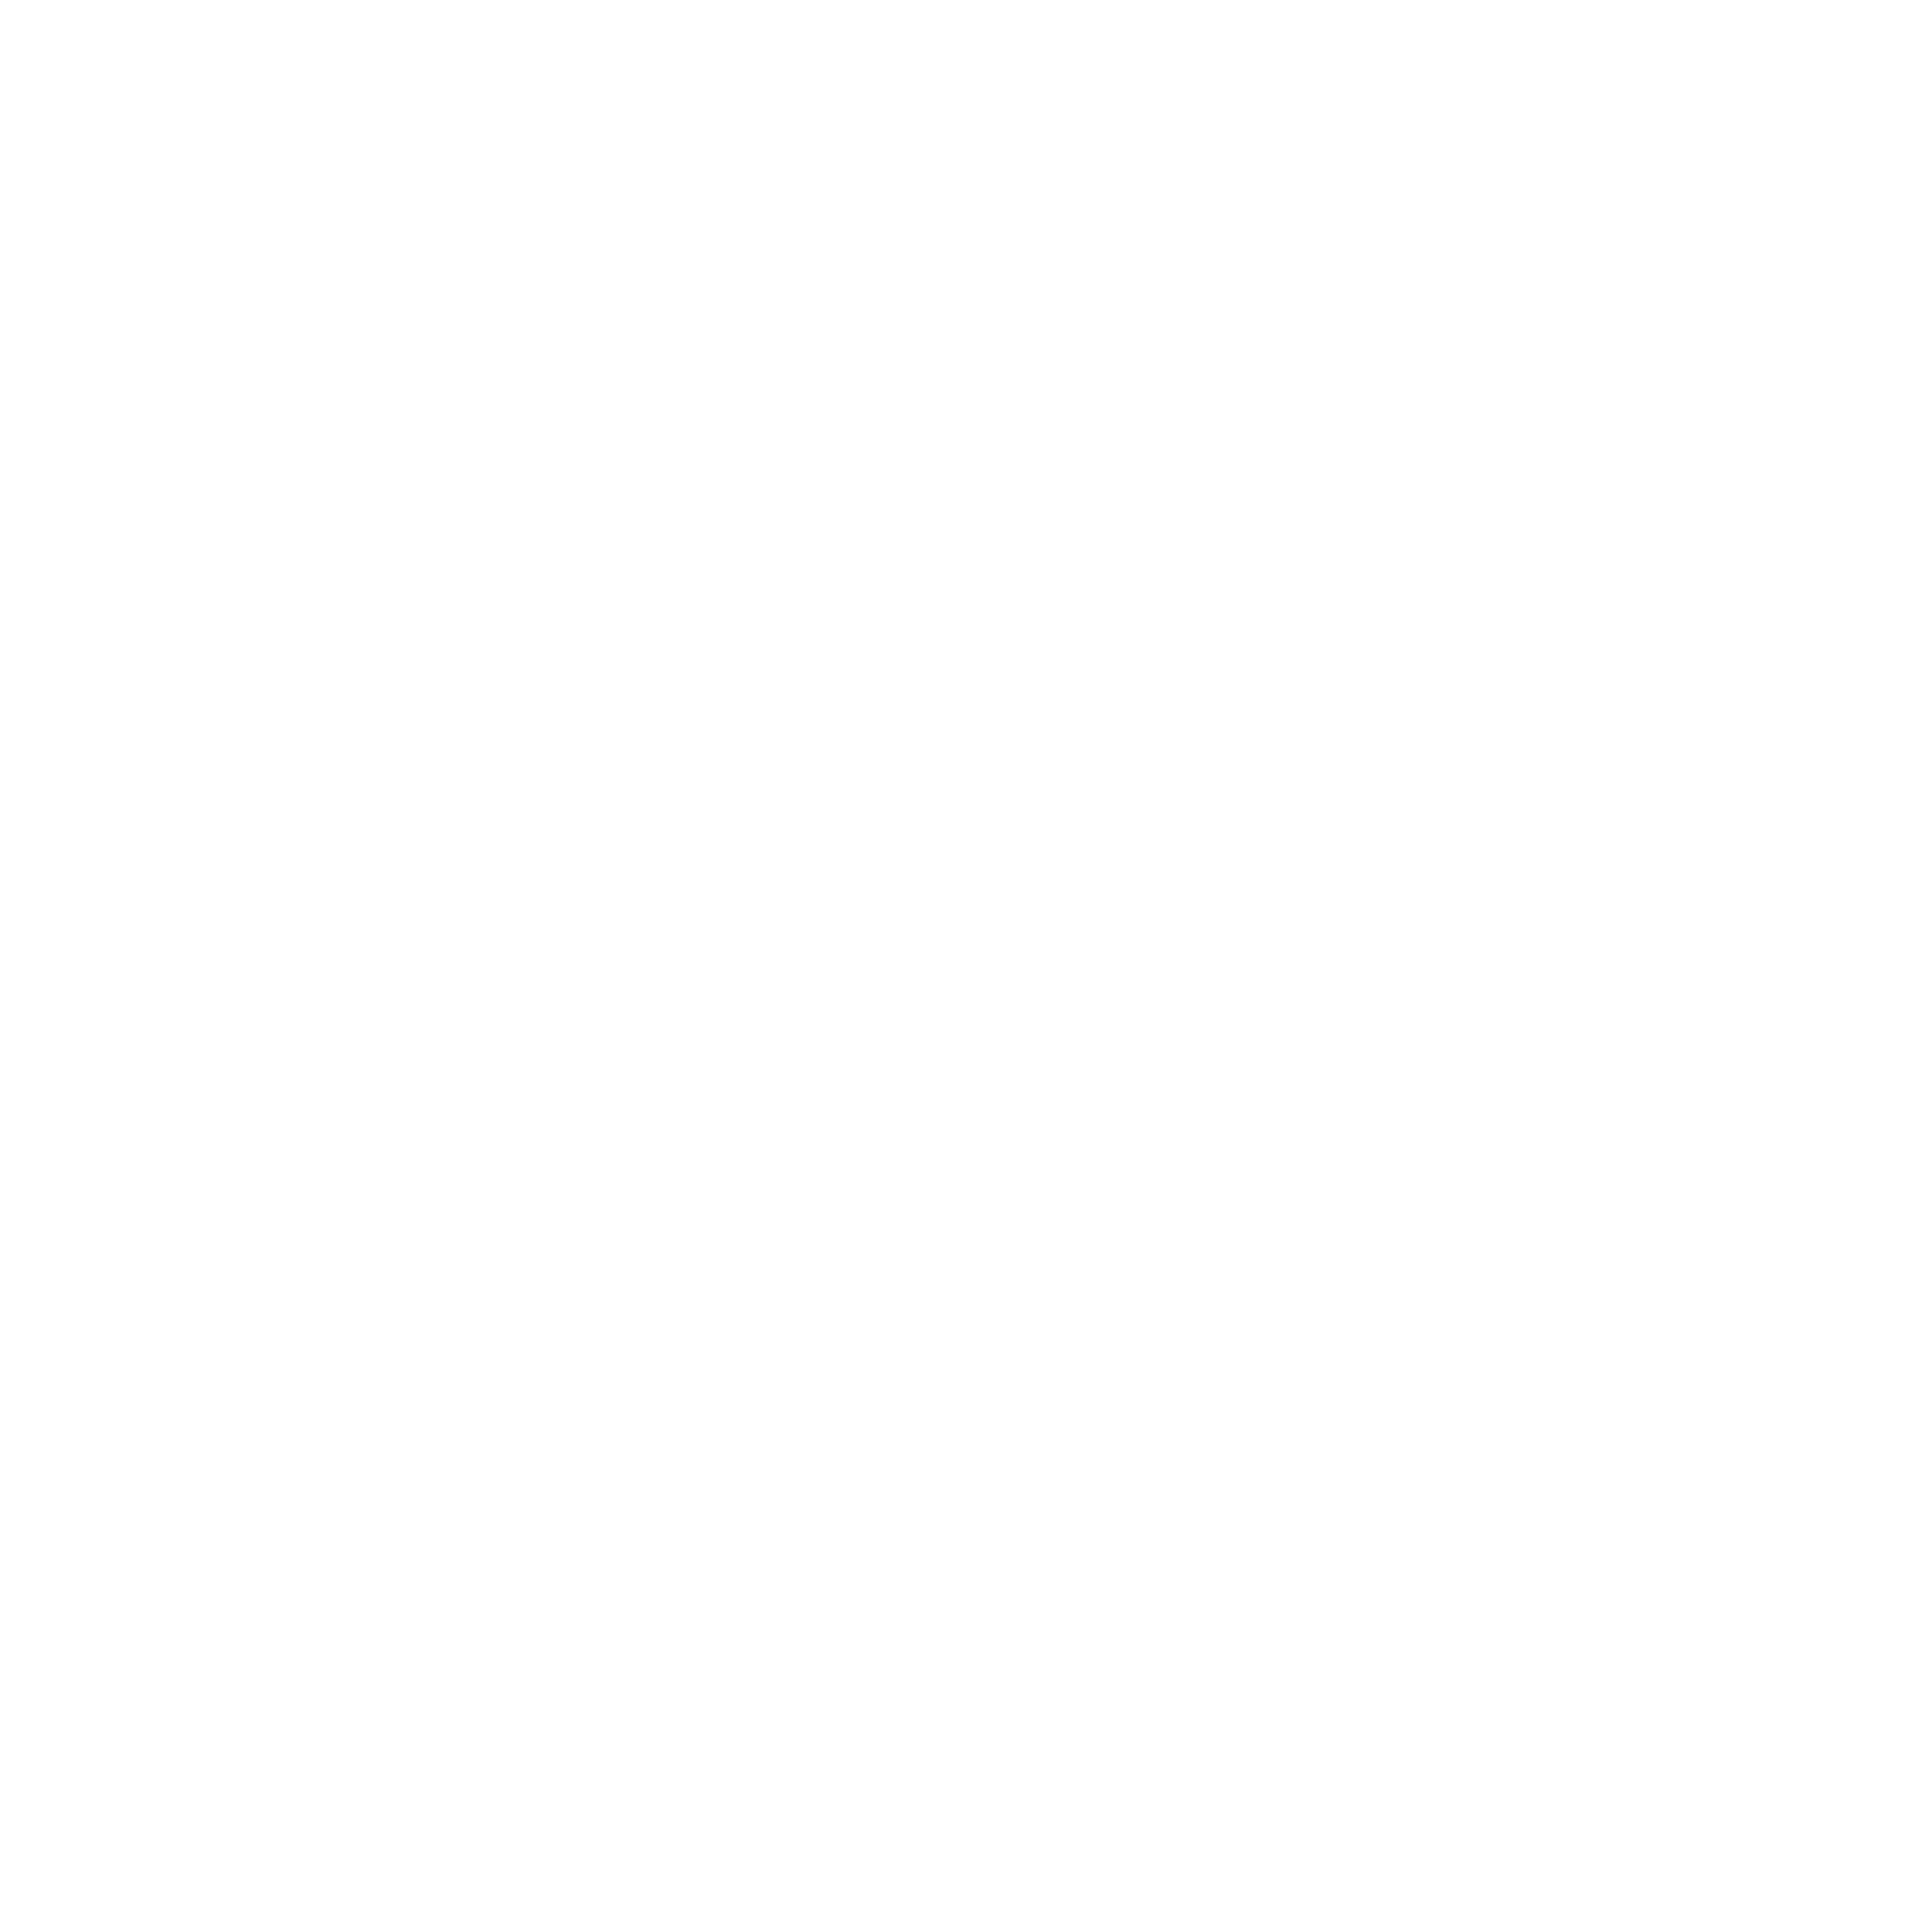 GYM HUB logo png 07 07 1